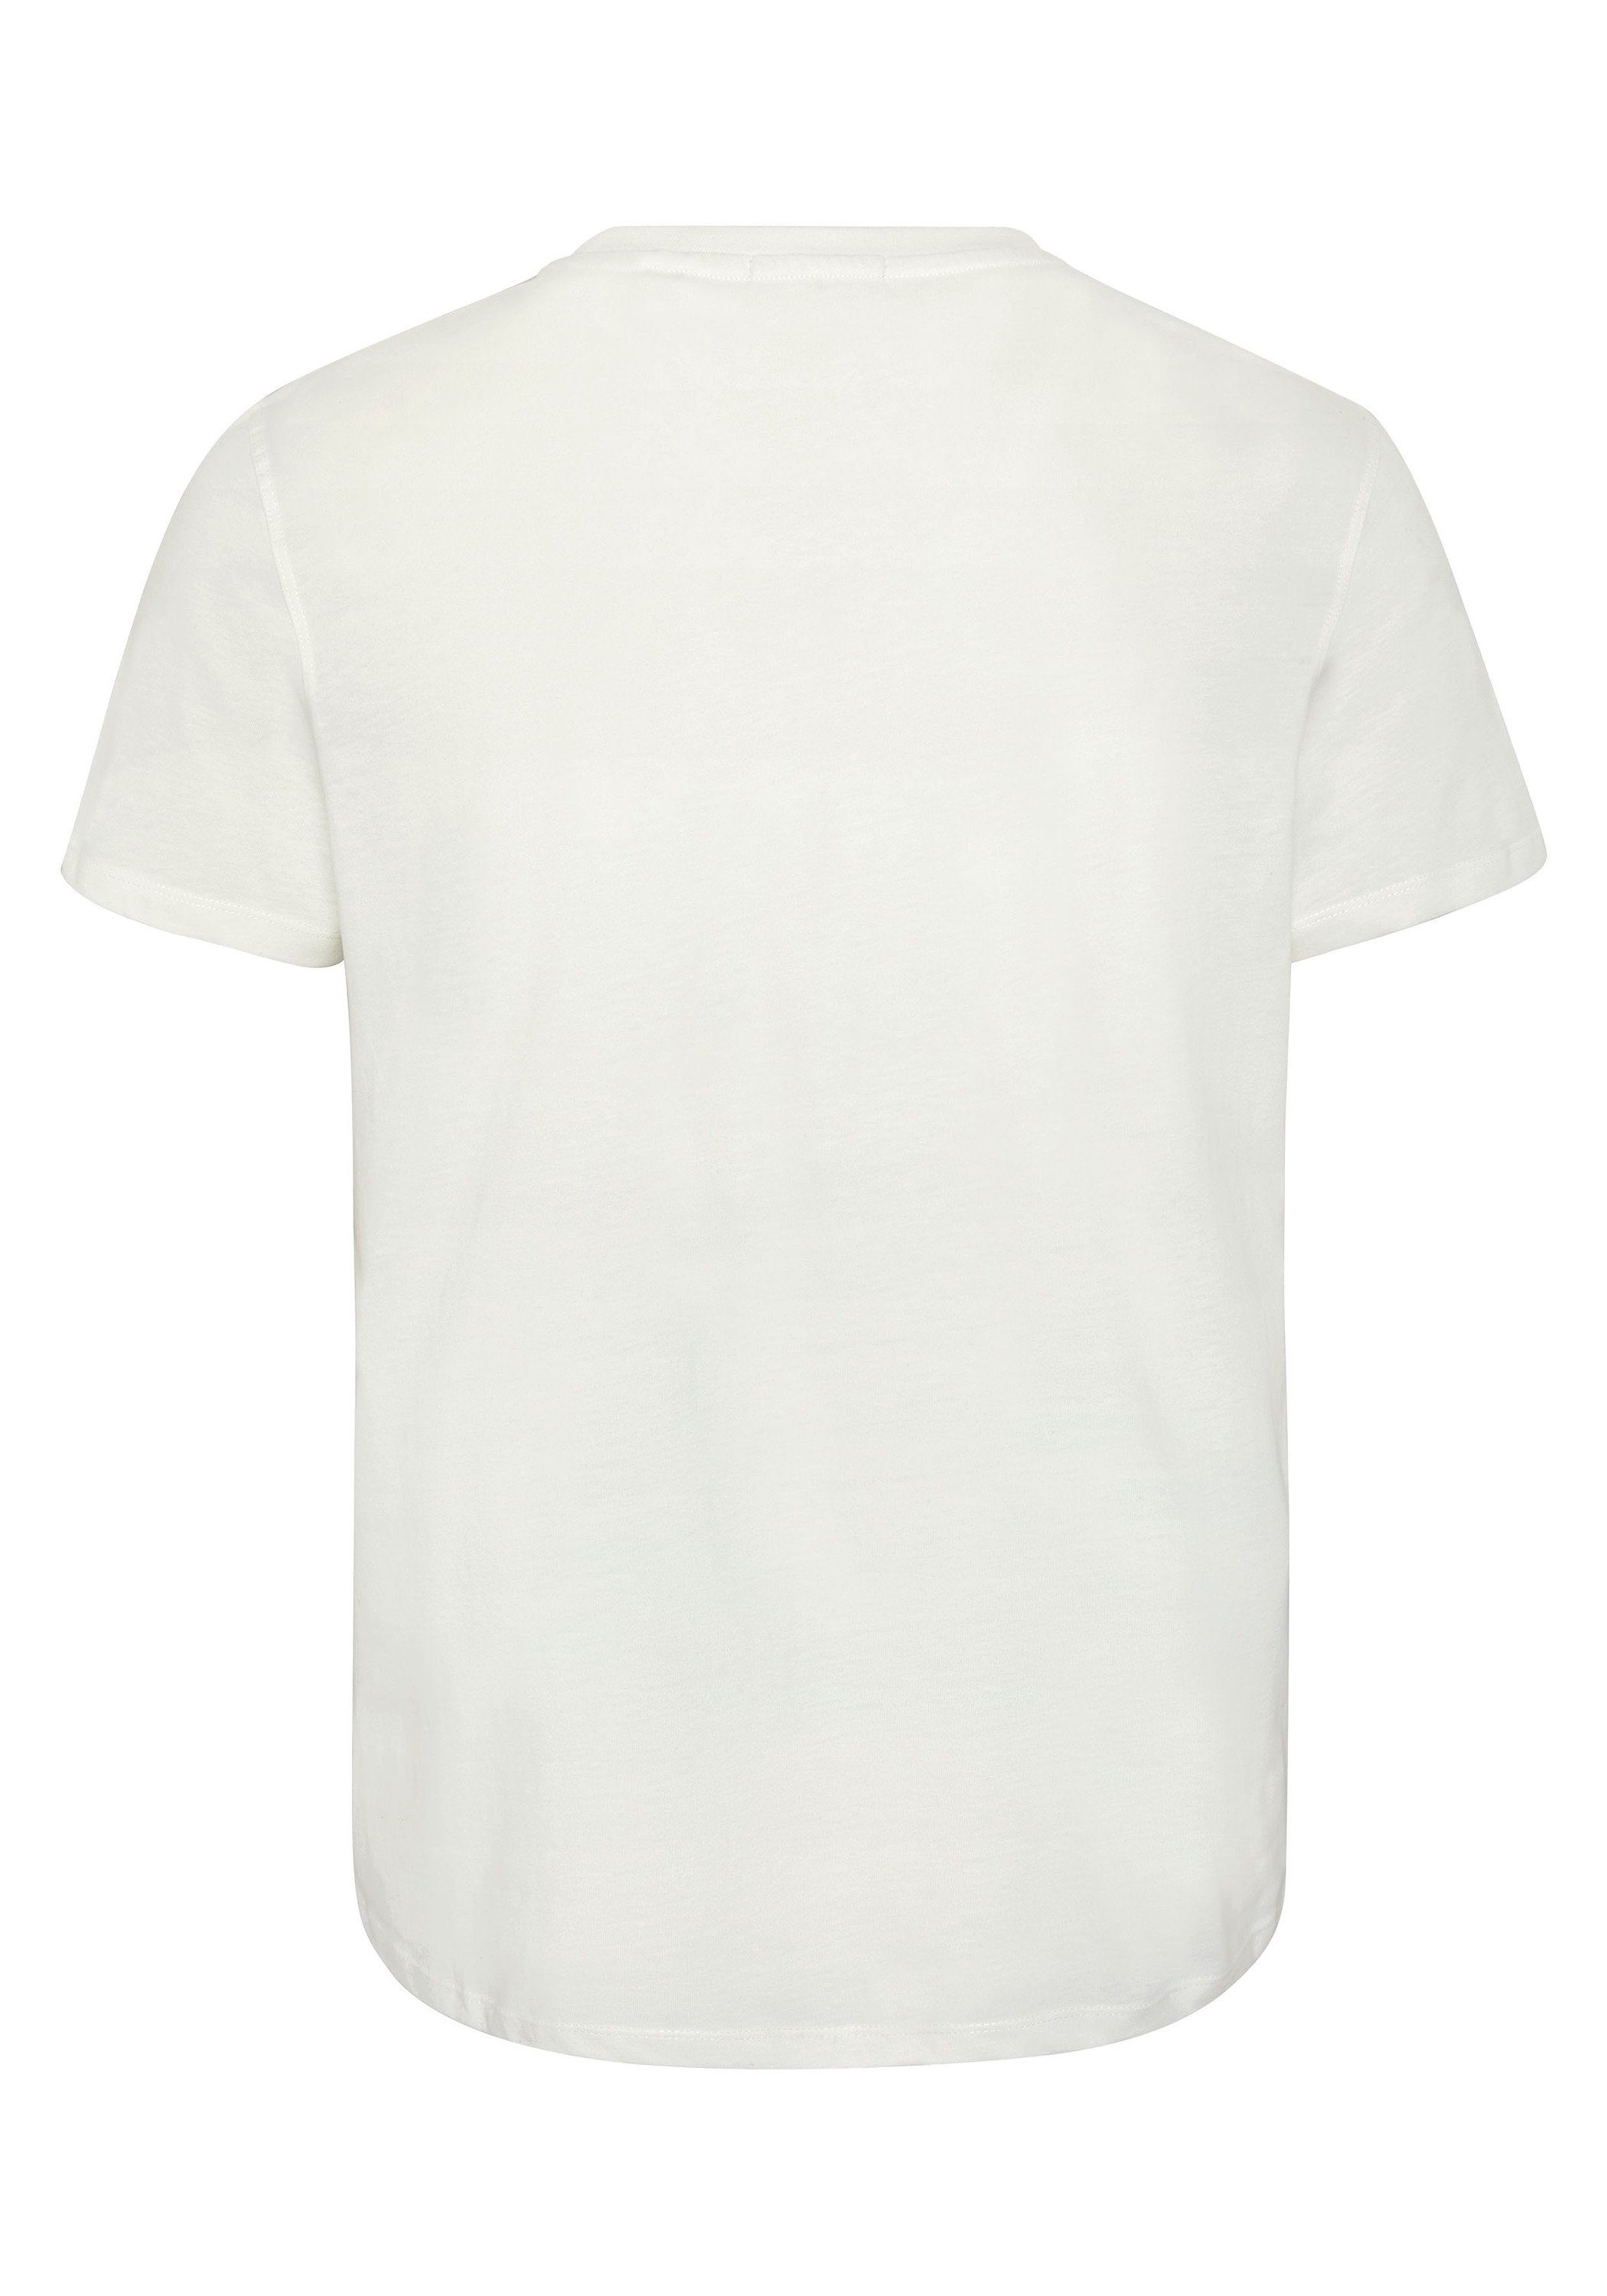 Chiemsee Print-Shirt T-Shirt mit Jumper-Motiv Star White 1